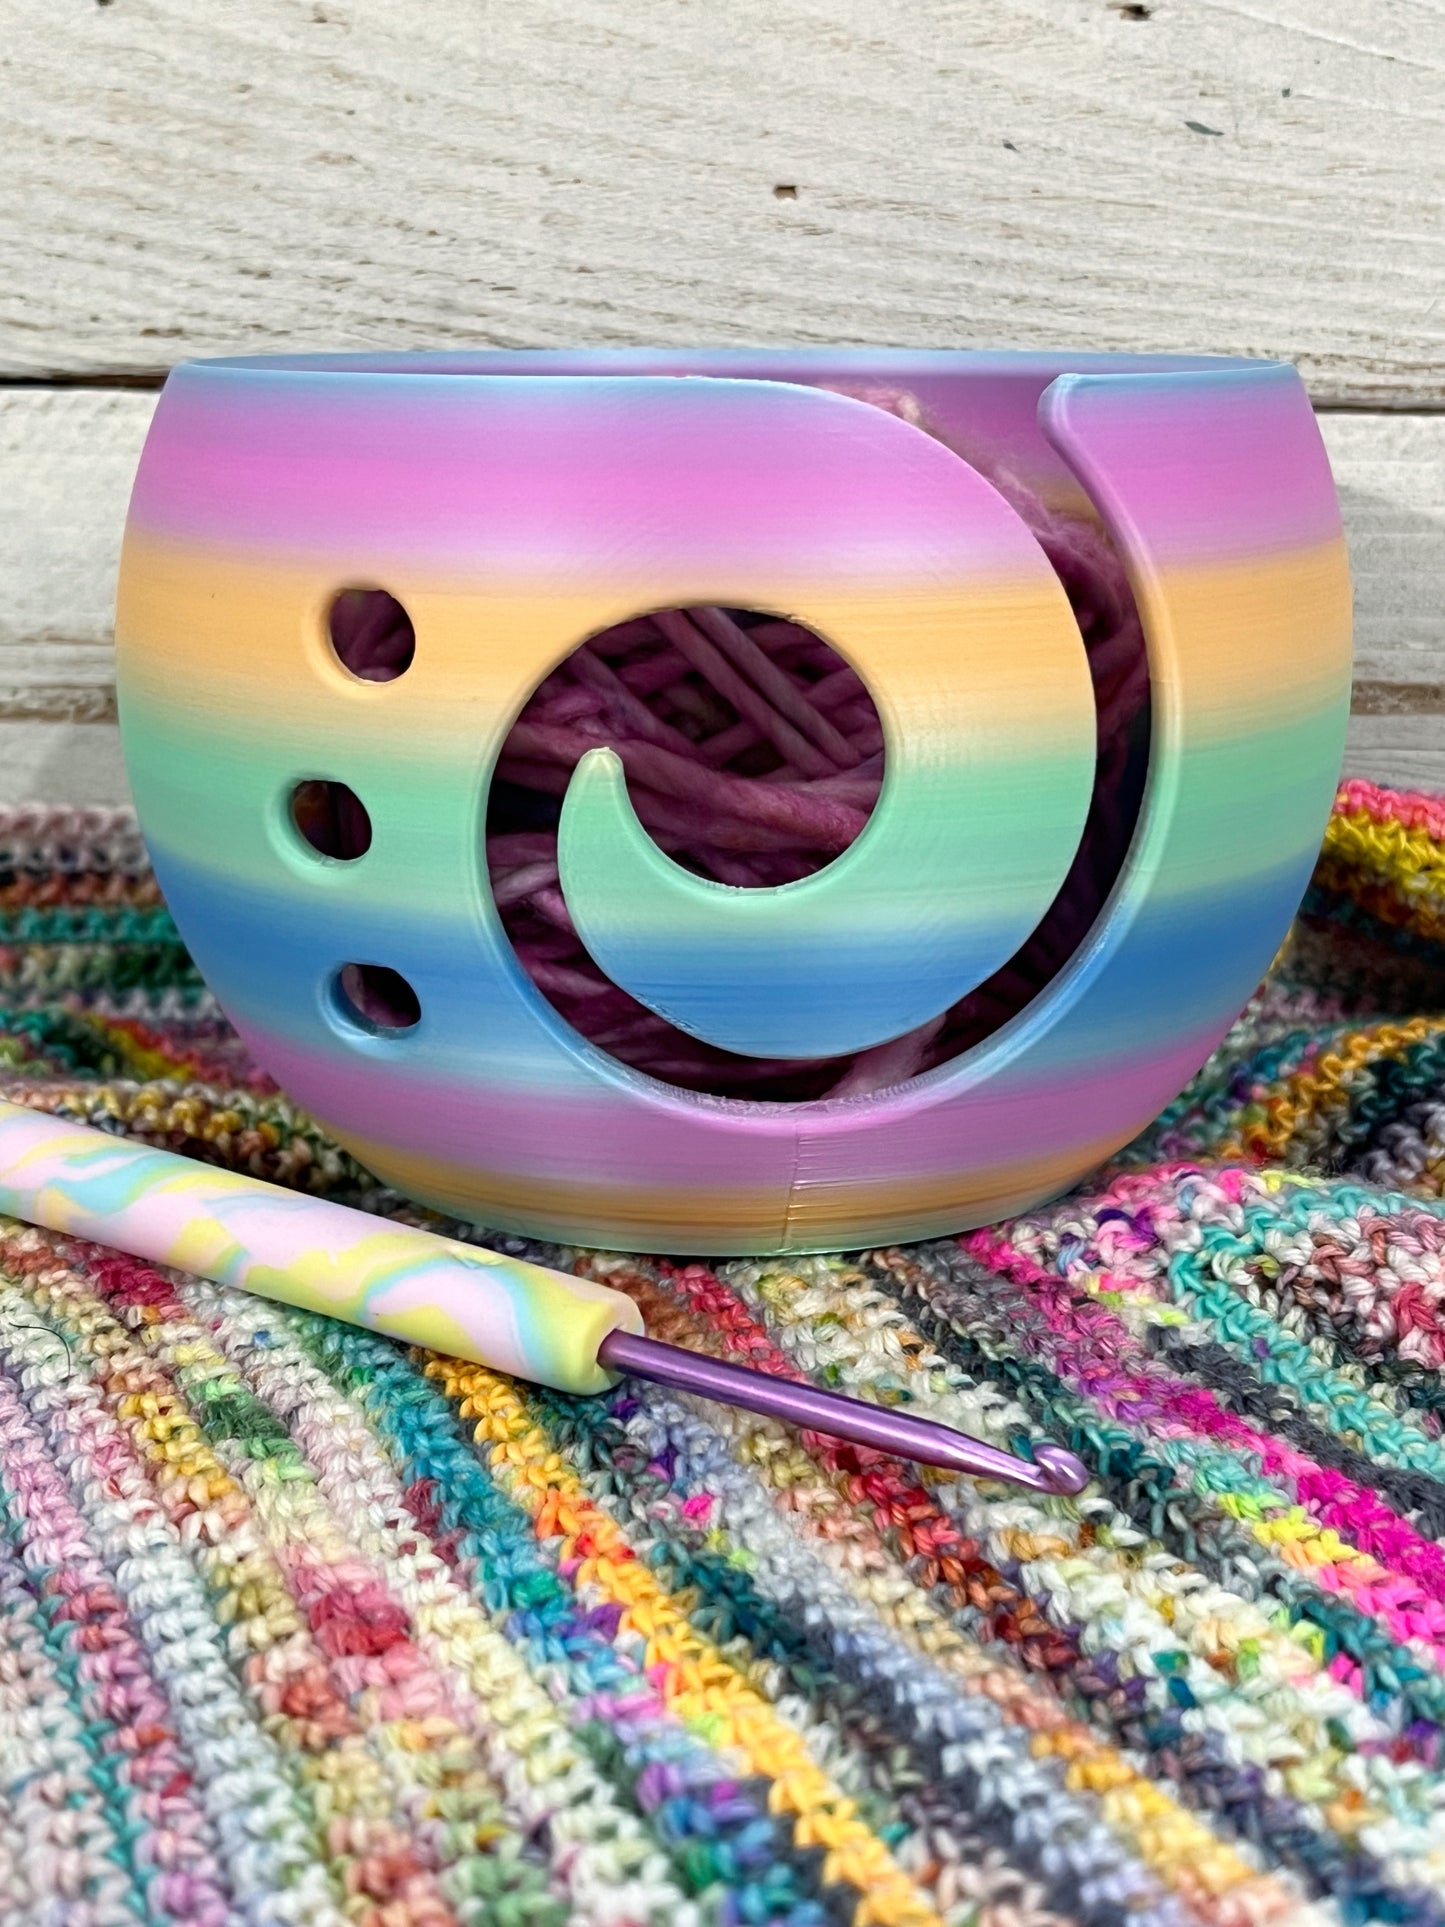 3D Printed Striped Yarn Bowl, Rainbow Yarn Bowl for Knitting and Crochet